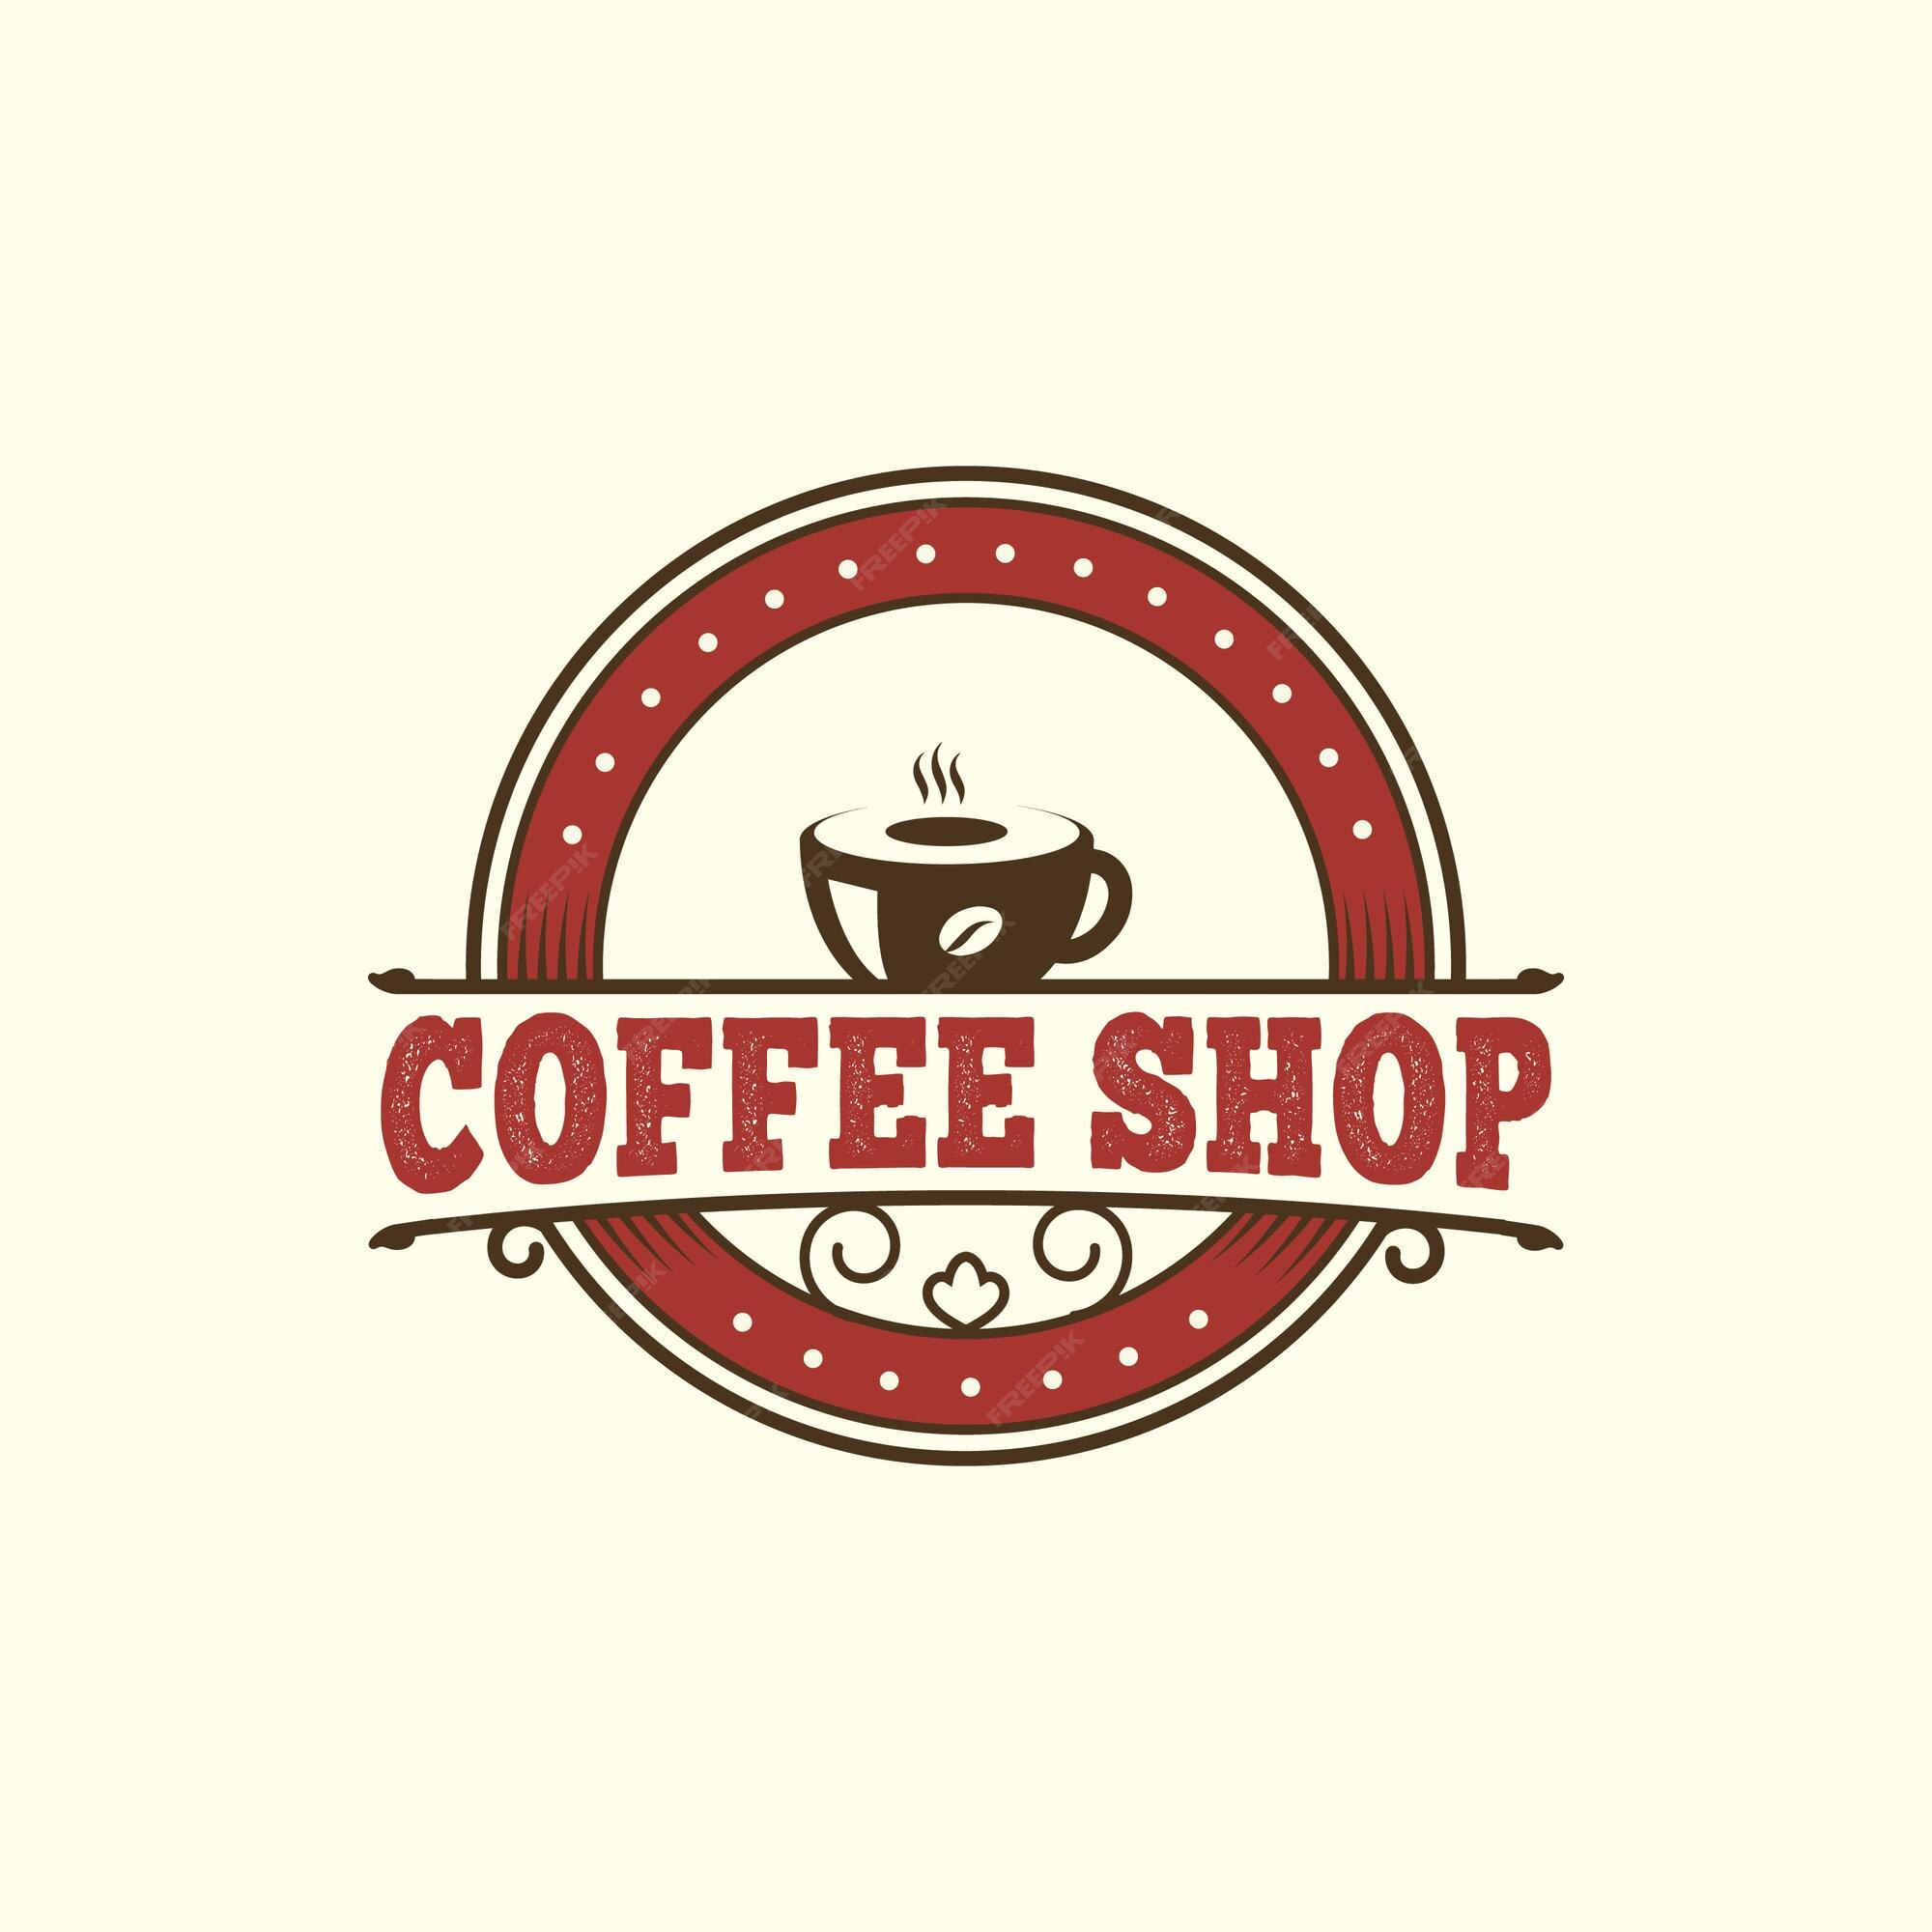 Premium Vector | Classic coffee shop and retro vintage style logo design